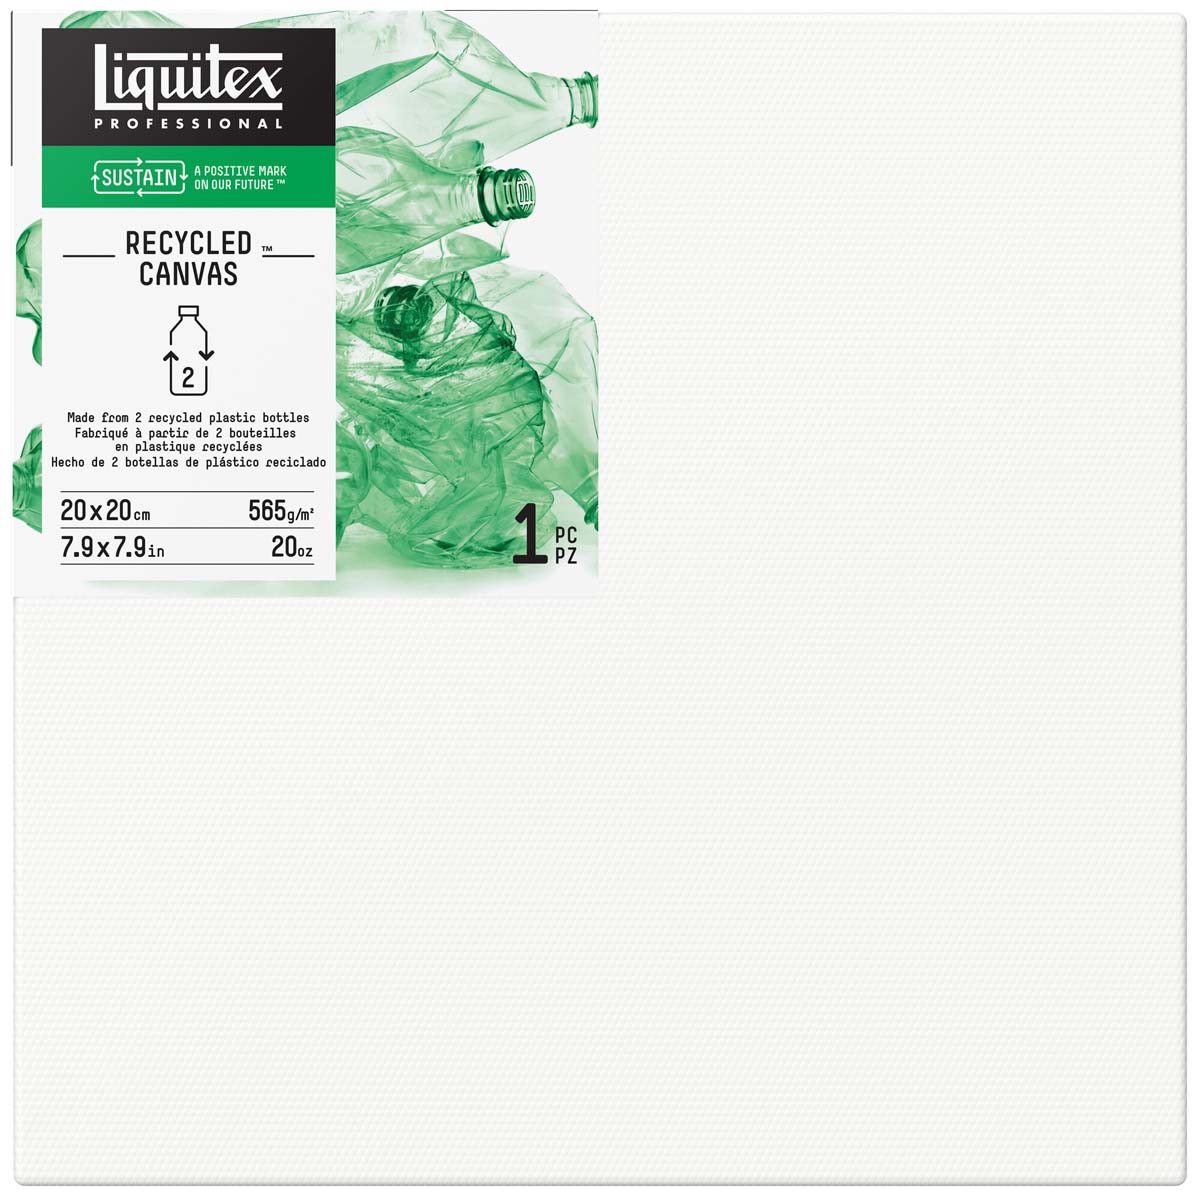 Liquitex Recycled Canvas - Standard Edge - 20x20cm - 8x8"